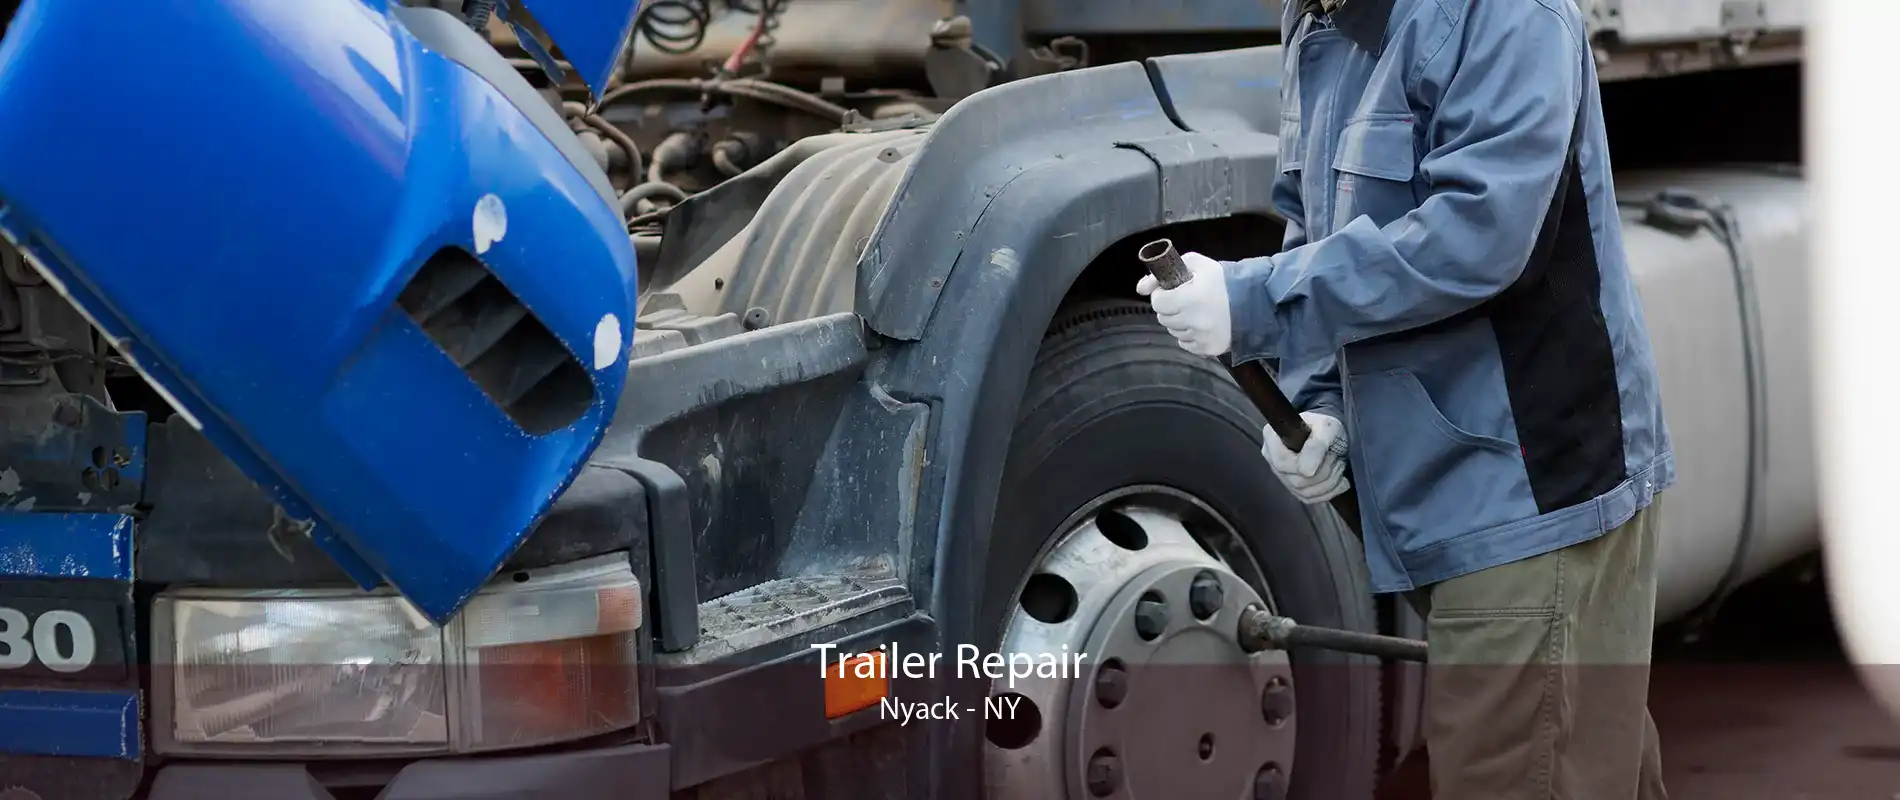 Trailer Repair Nyack - NY